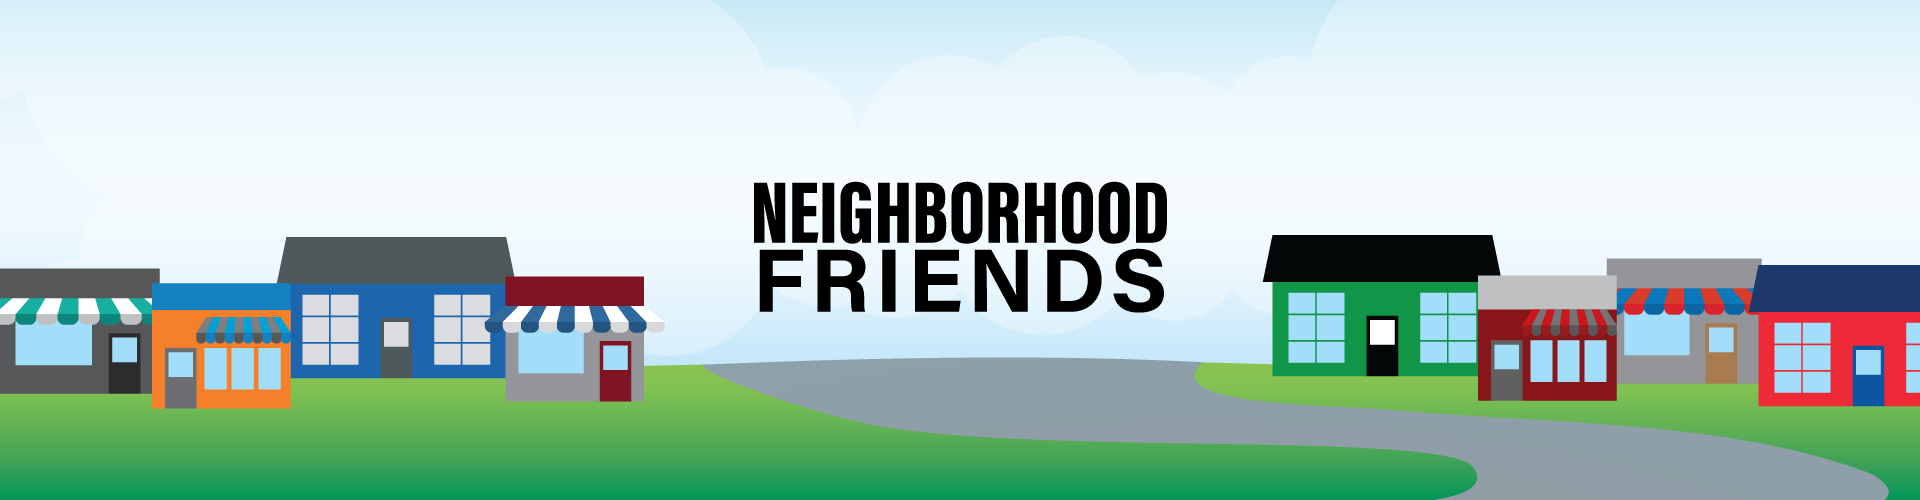 Neighborhood Friends header image